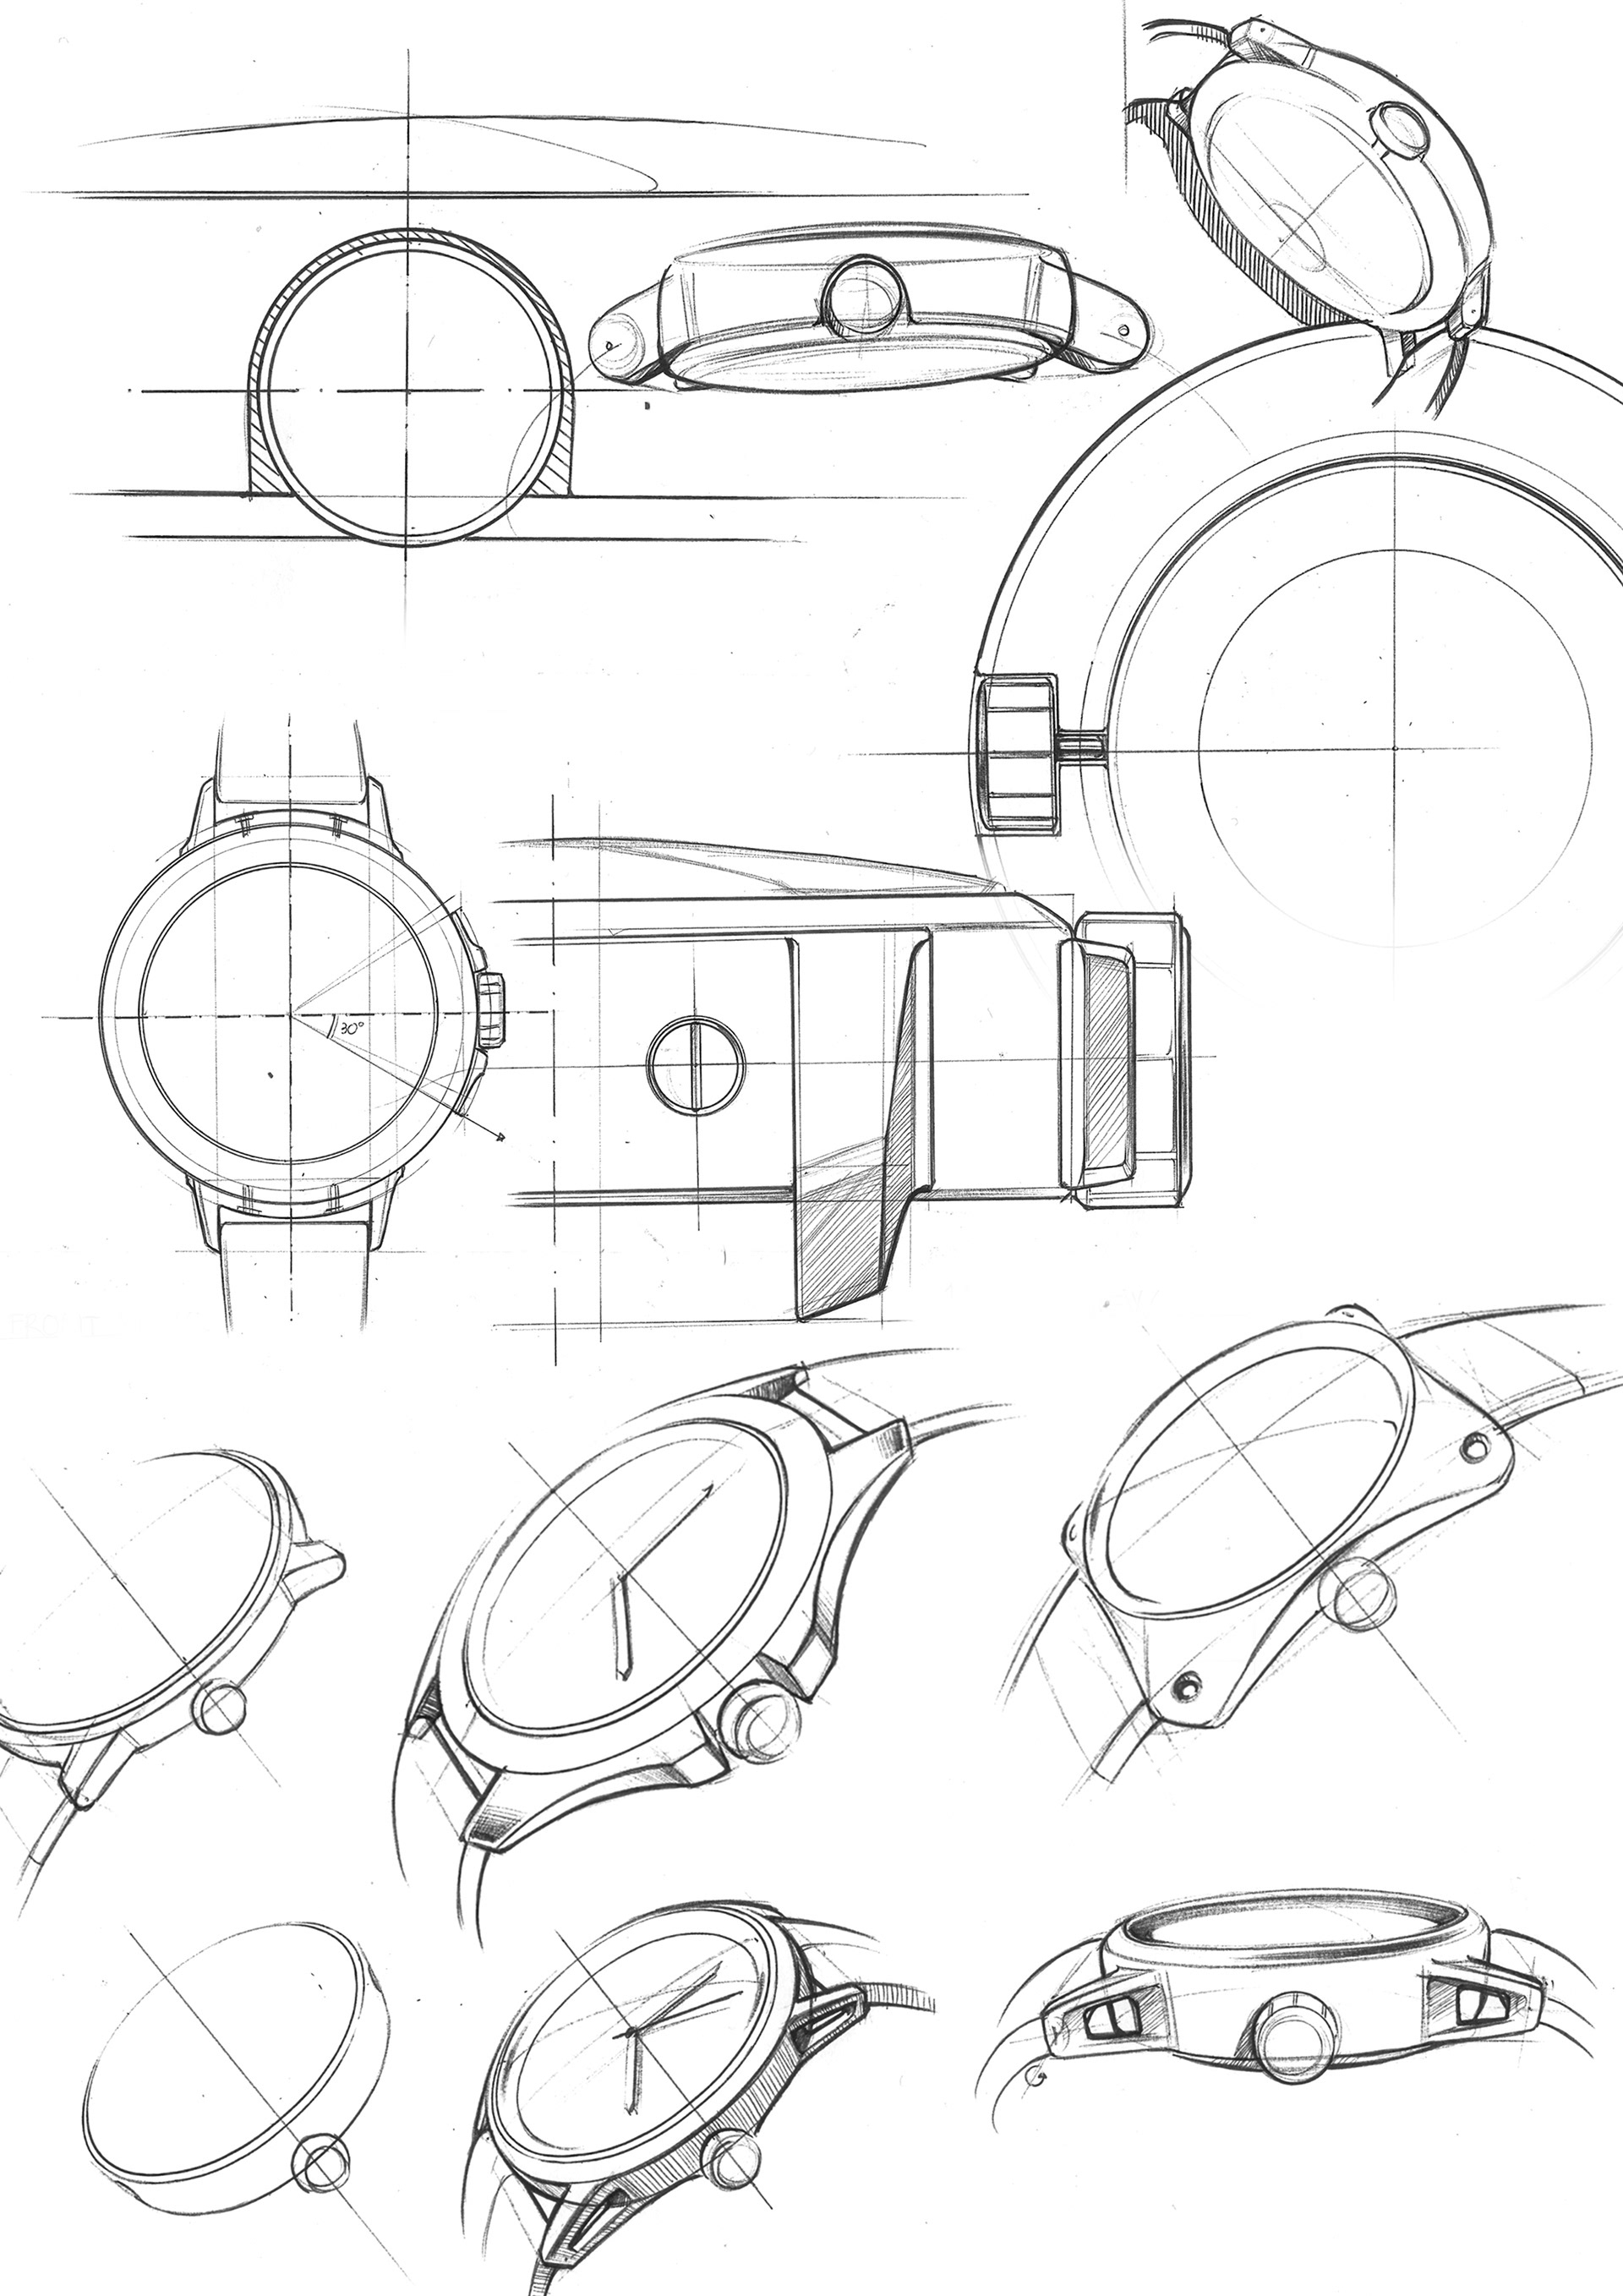 watch design drawing